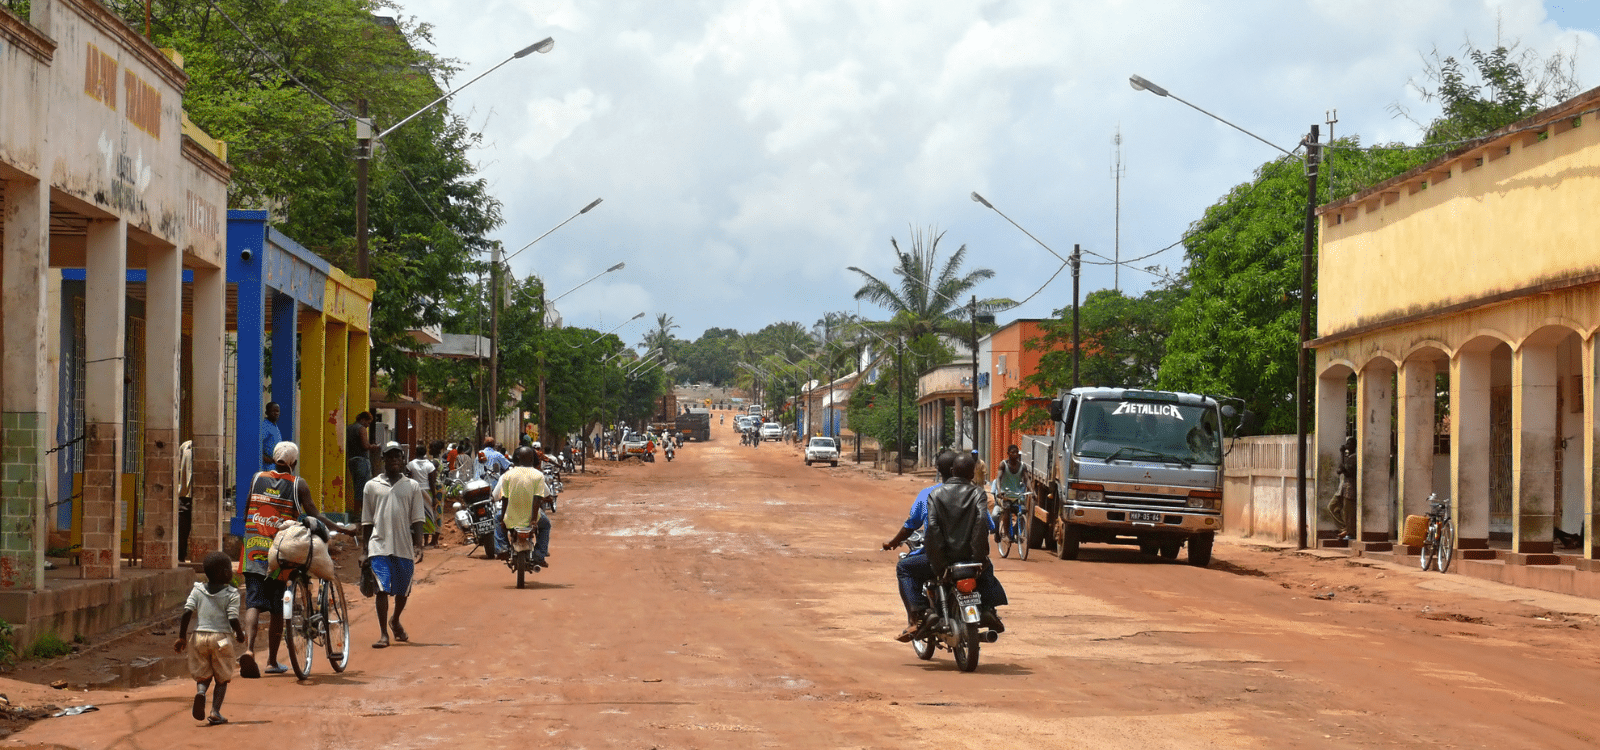 Road in Mocuba, Mozambique